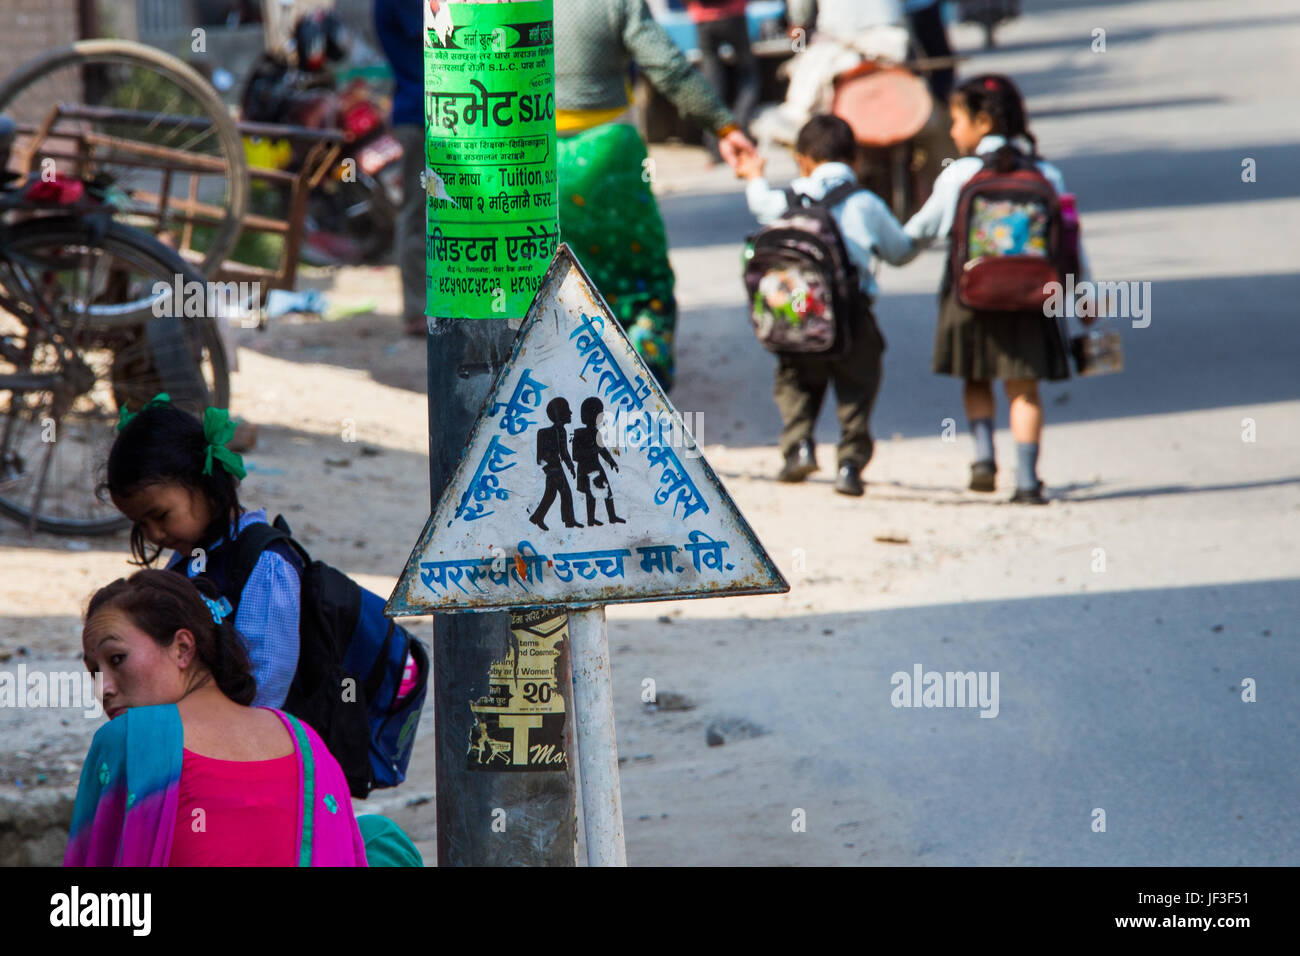 Attraversamento Scuola sign in Kathmandu, Nepal Foto Stock